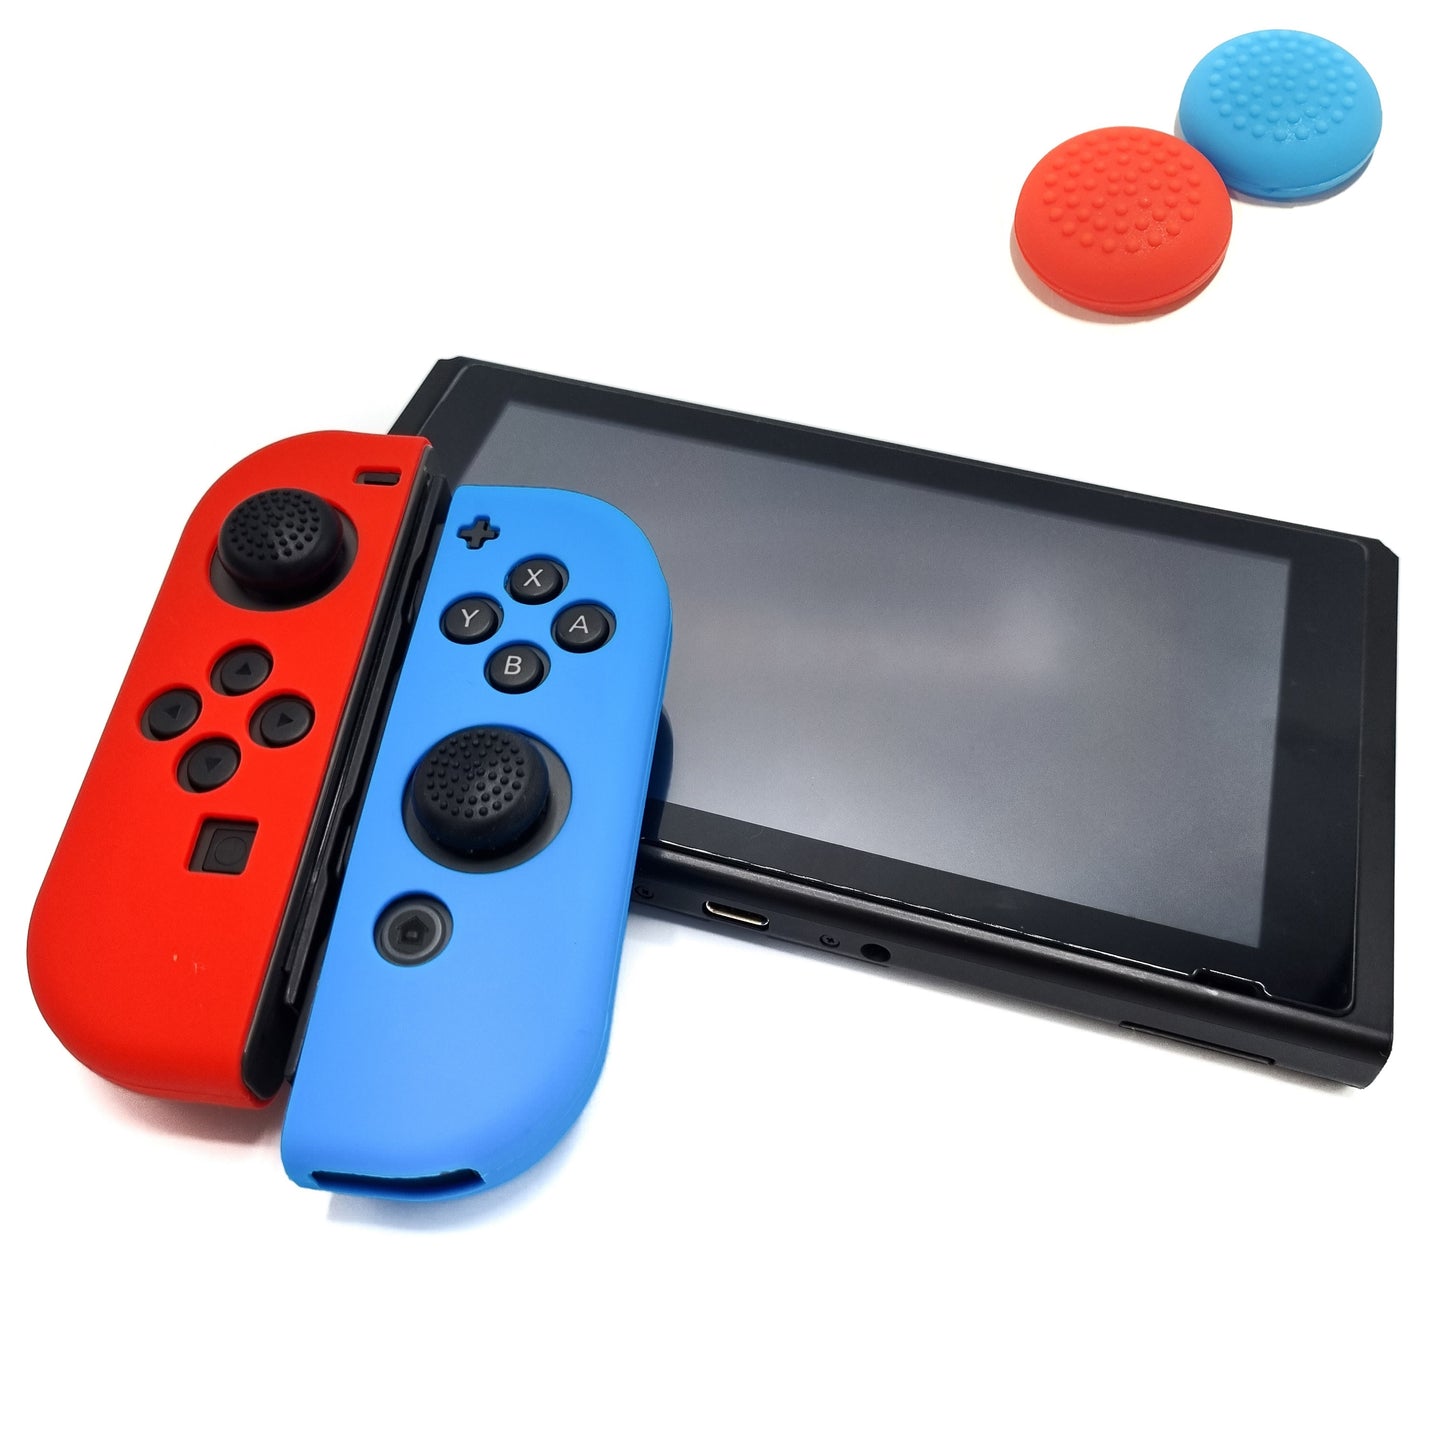 Beschermhoesjes + Thumbgrips | Performance Antislip Skin | Softcover Grip Case | Rood/Lichtblauw + Blauw/Rood Thumbs Ribbel | Accessoires geschikt voor Nintendo Switch Joy-Con Controllers